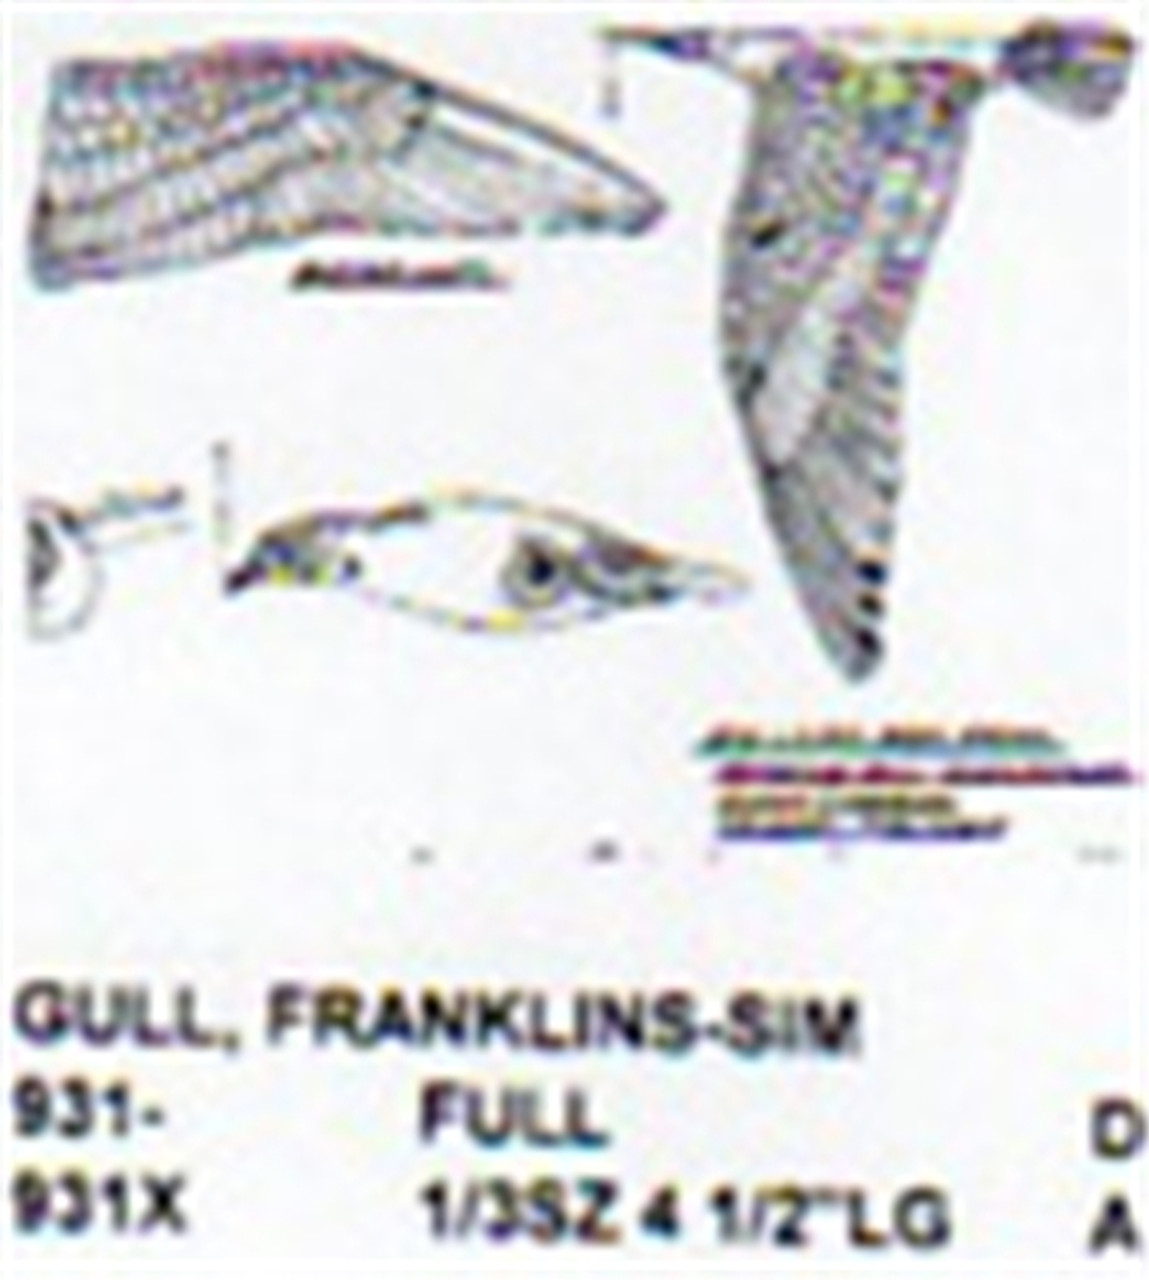 Franklin's Gull Flying/Soaring